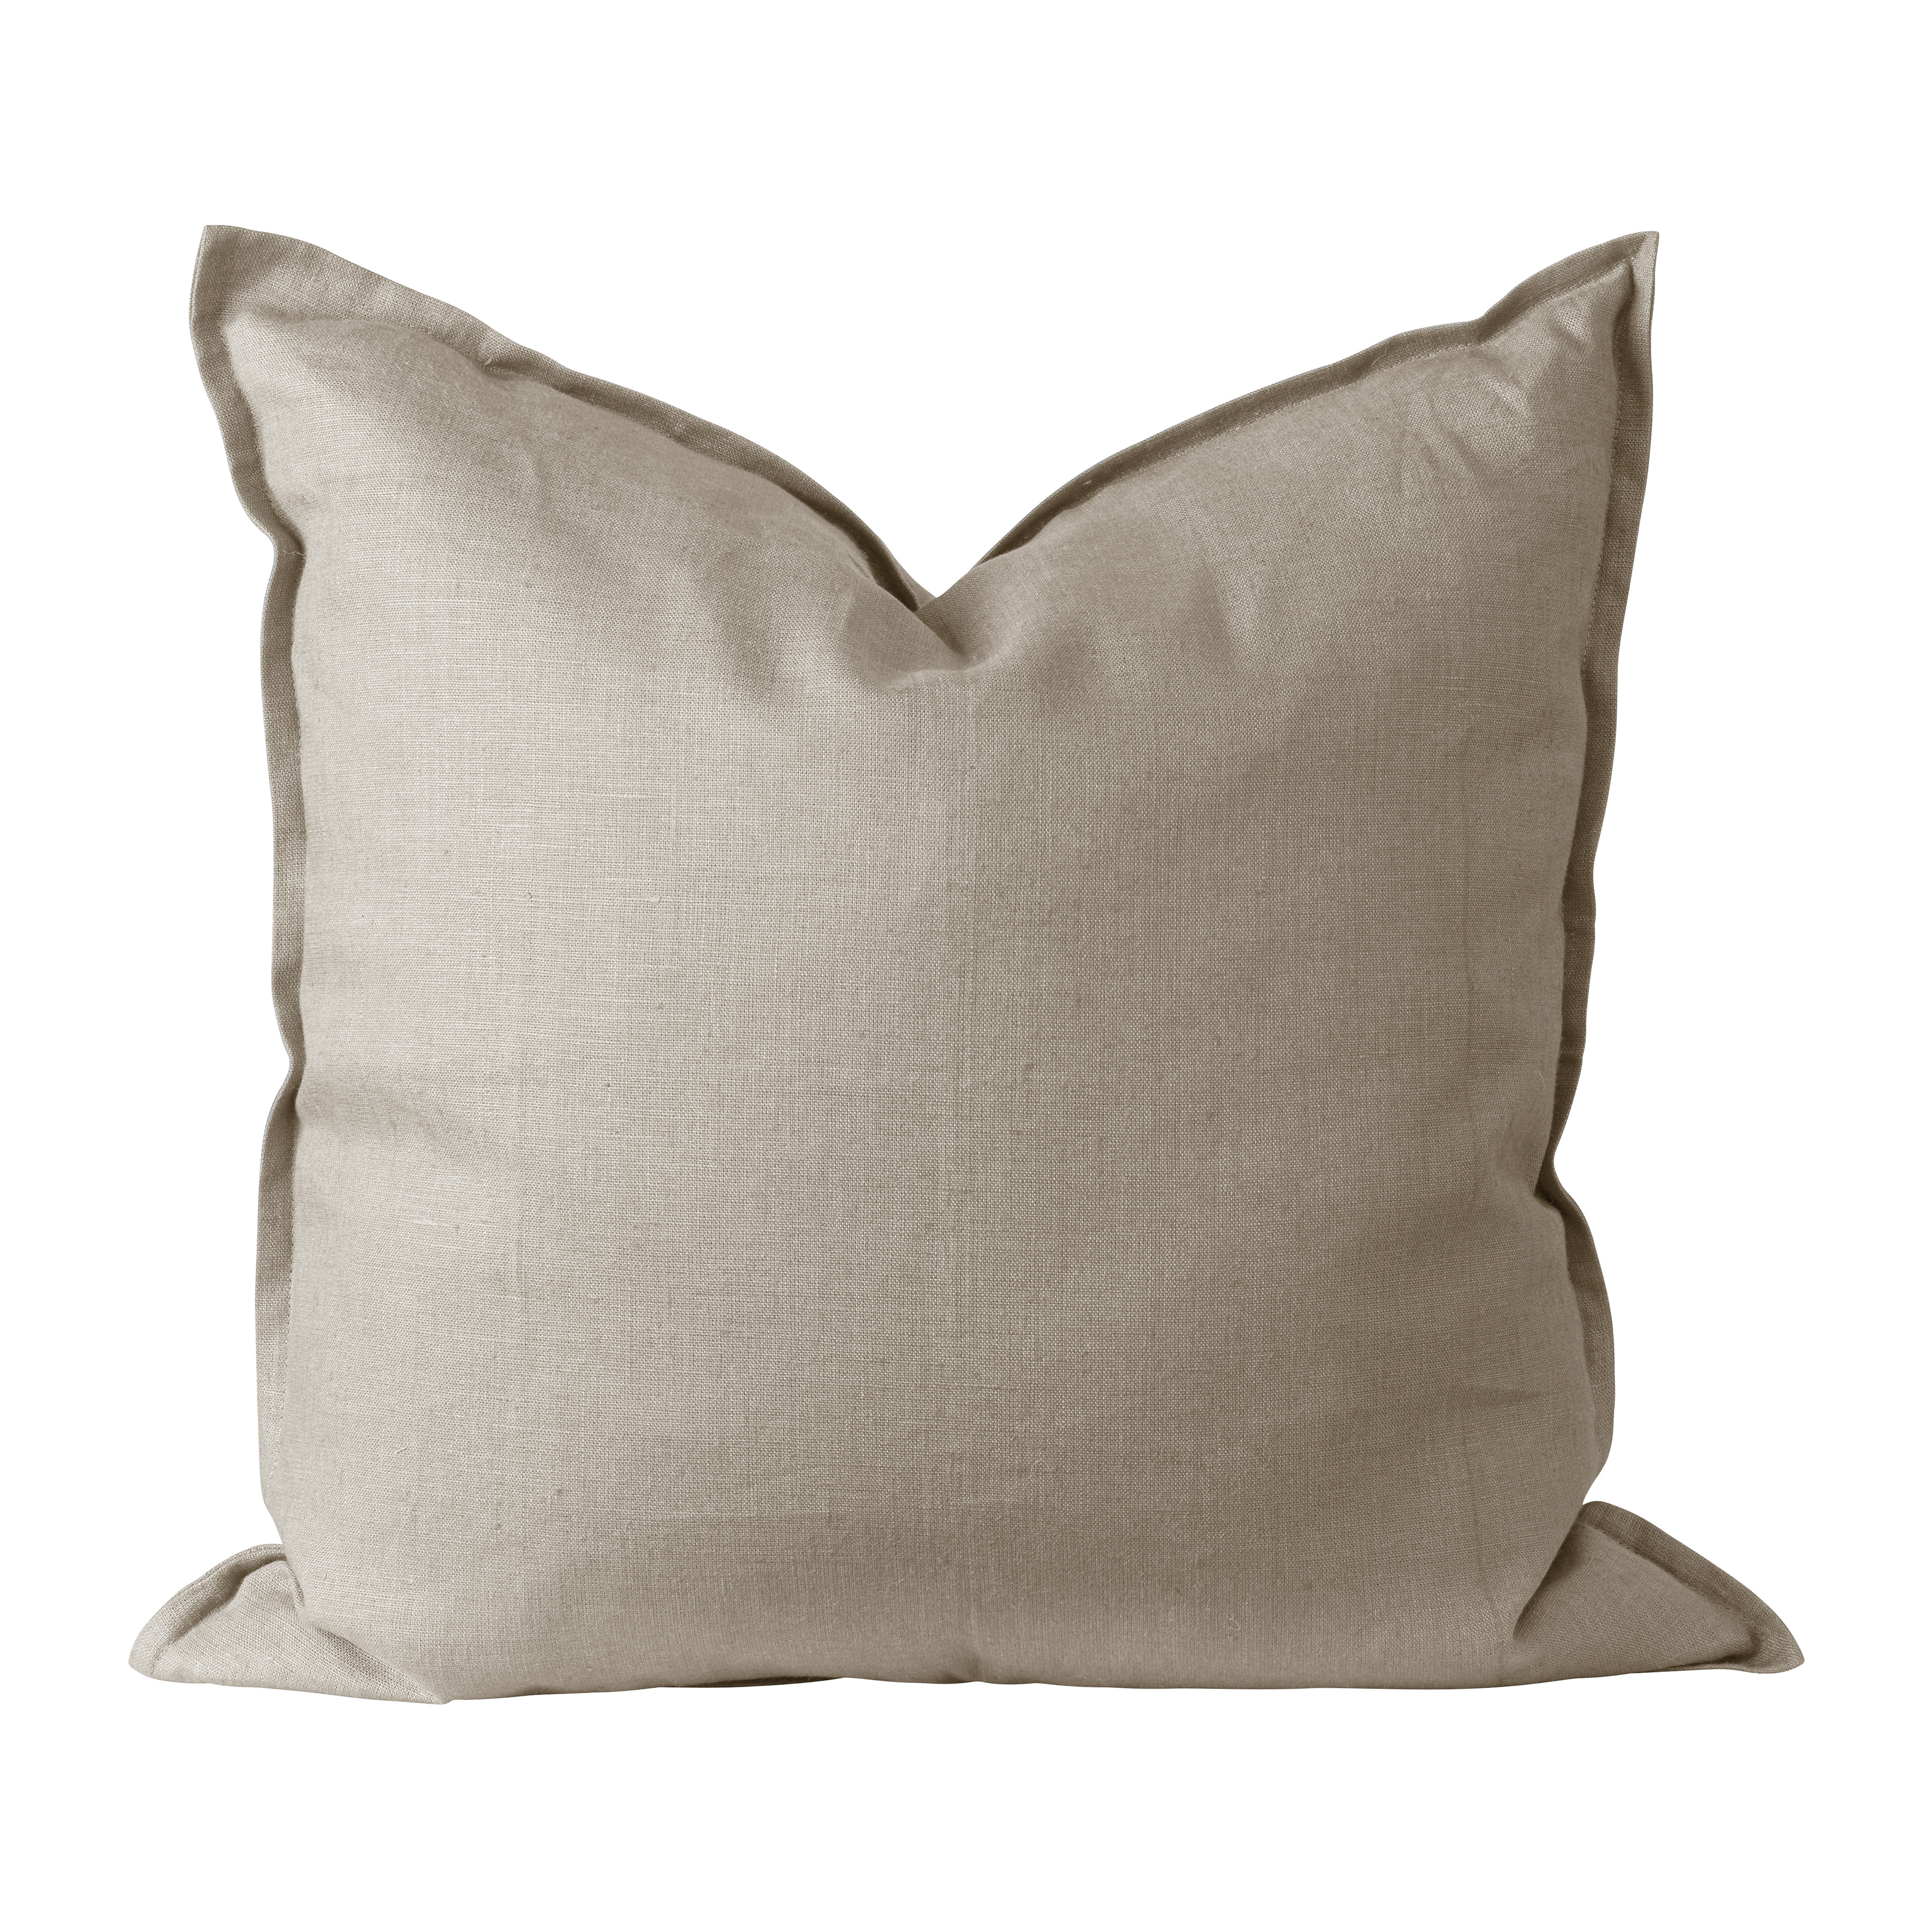 Nunubee Cotton Linen Cushion Cover 18X18 Pillowcase Throw Pillow Case Sofa Decoration Bones Skulls 4 